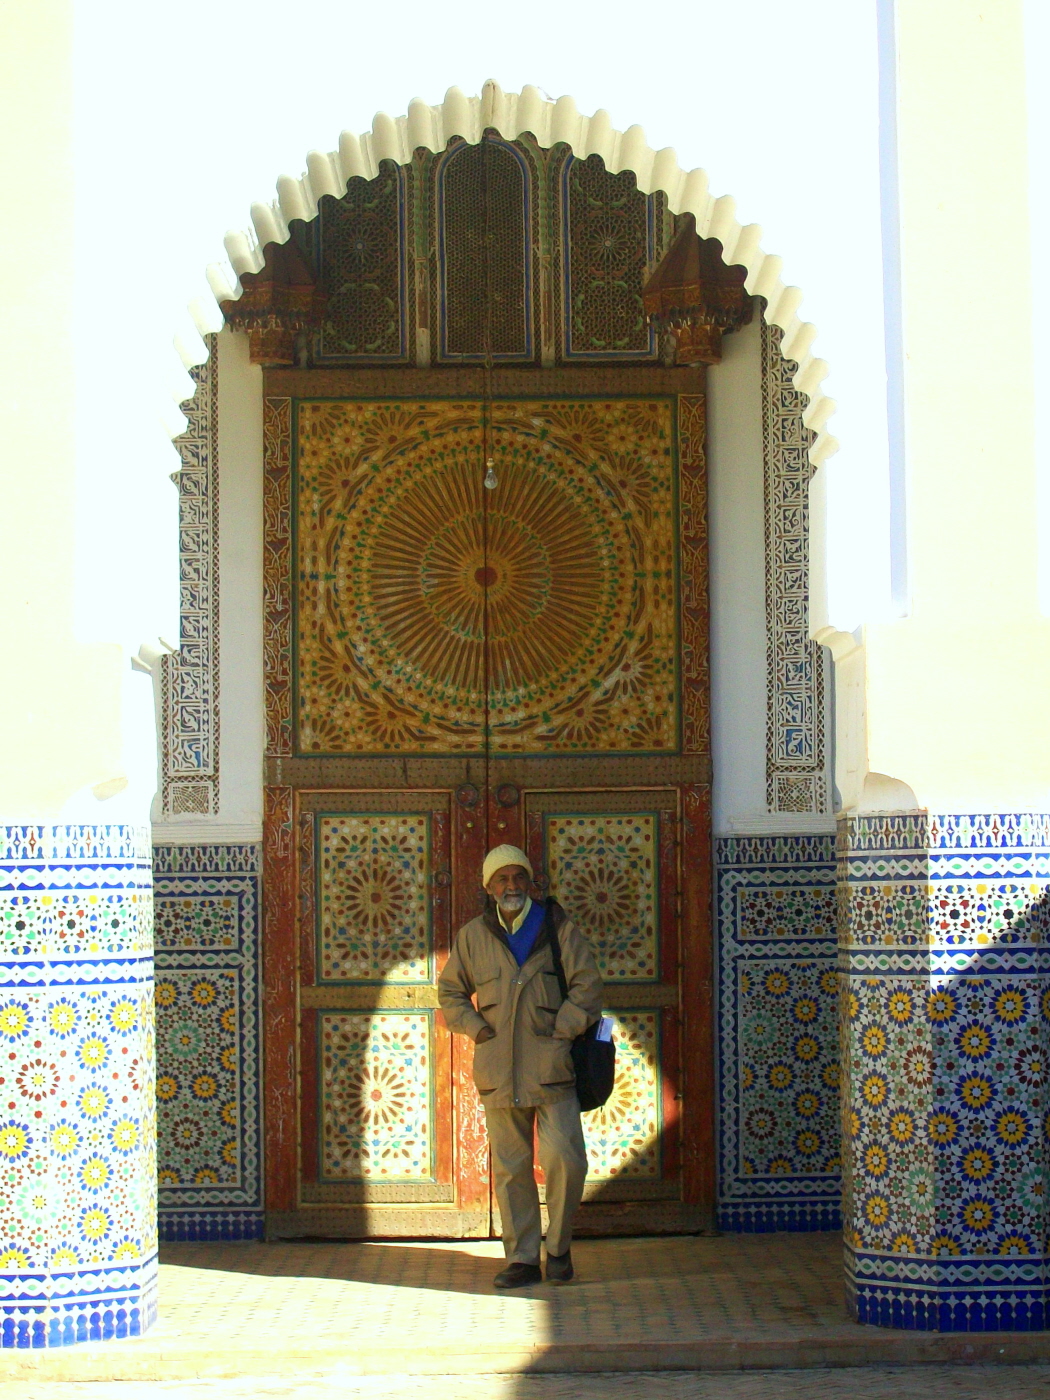 Ajata at Shrine of Sidi Muhammad bin Nasir al-Drawi (1603-1674) Nasiriyya Order - Tamegroute